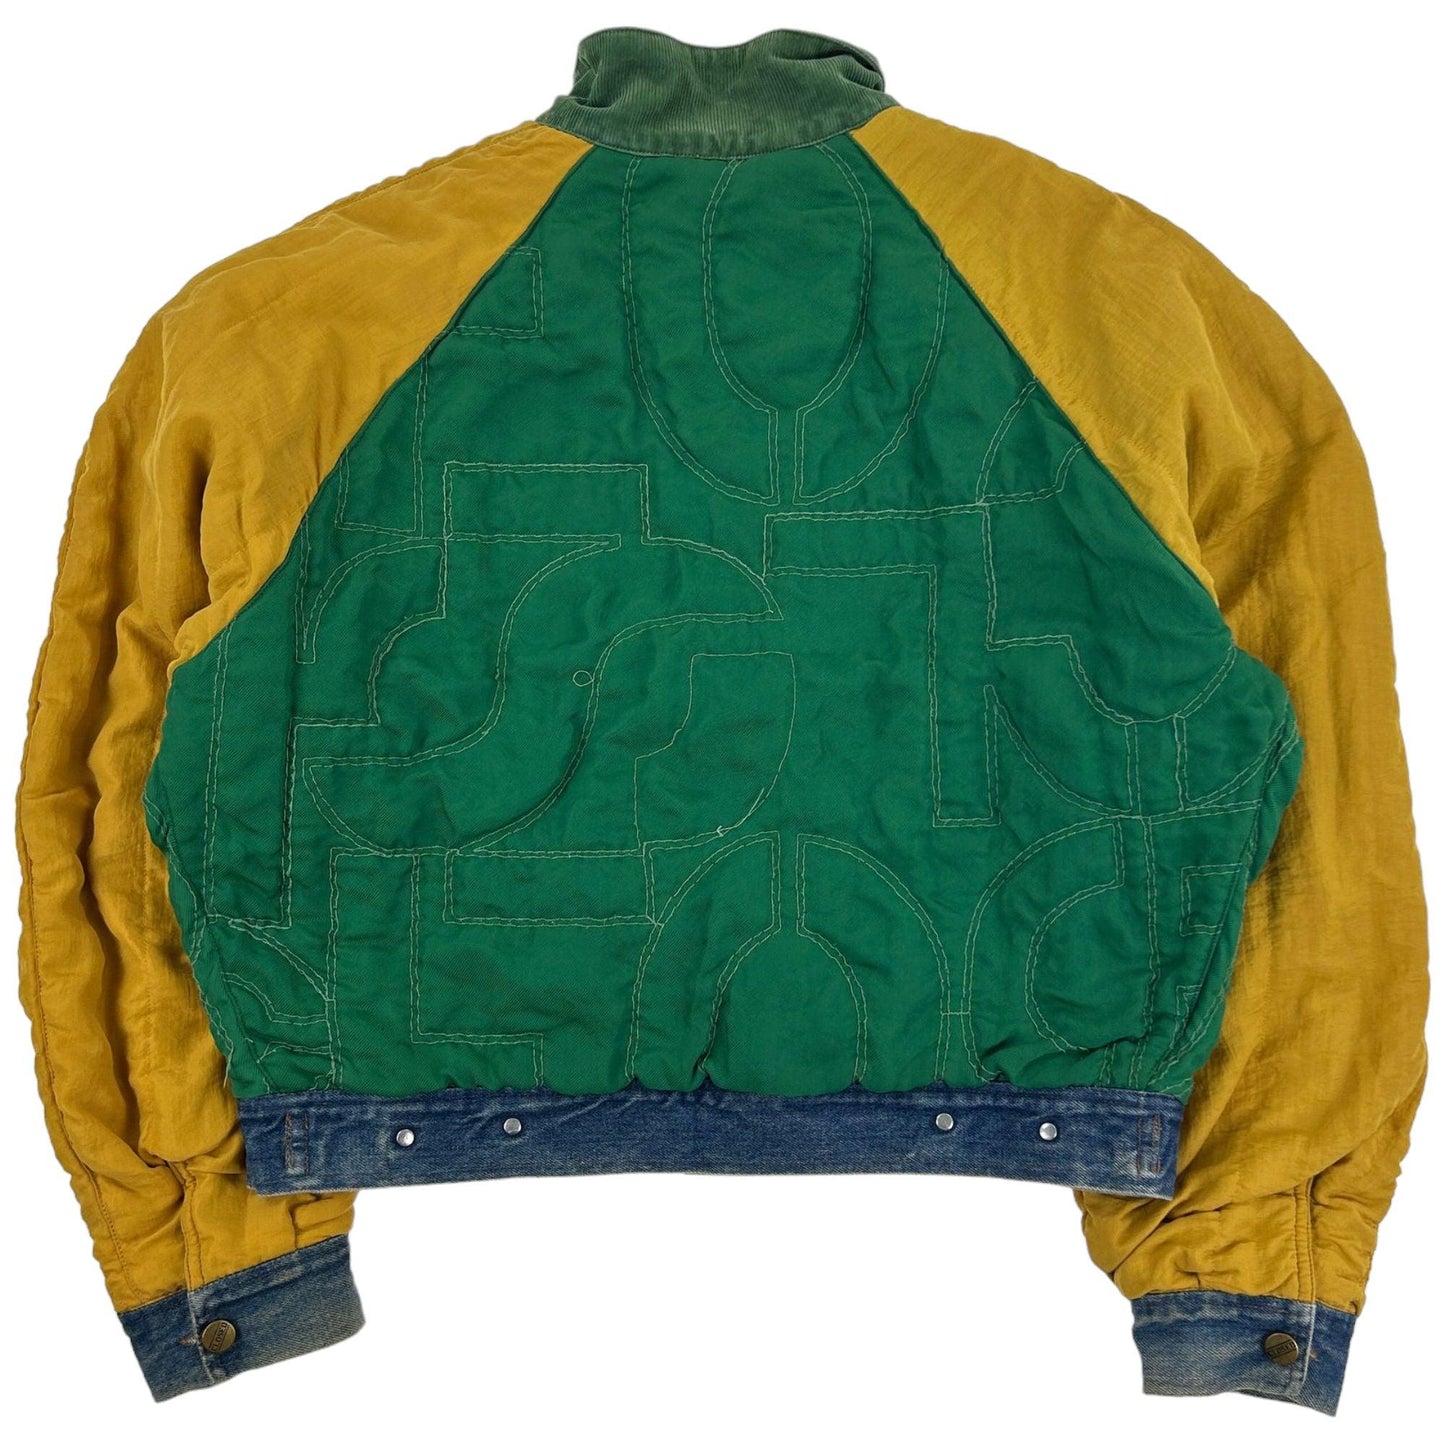 Vintage 1981 Marithe + Francois Girbaud CLOSED Reversible Denim Jacket Size L - Known Source